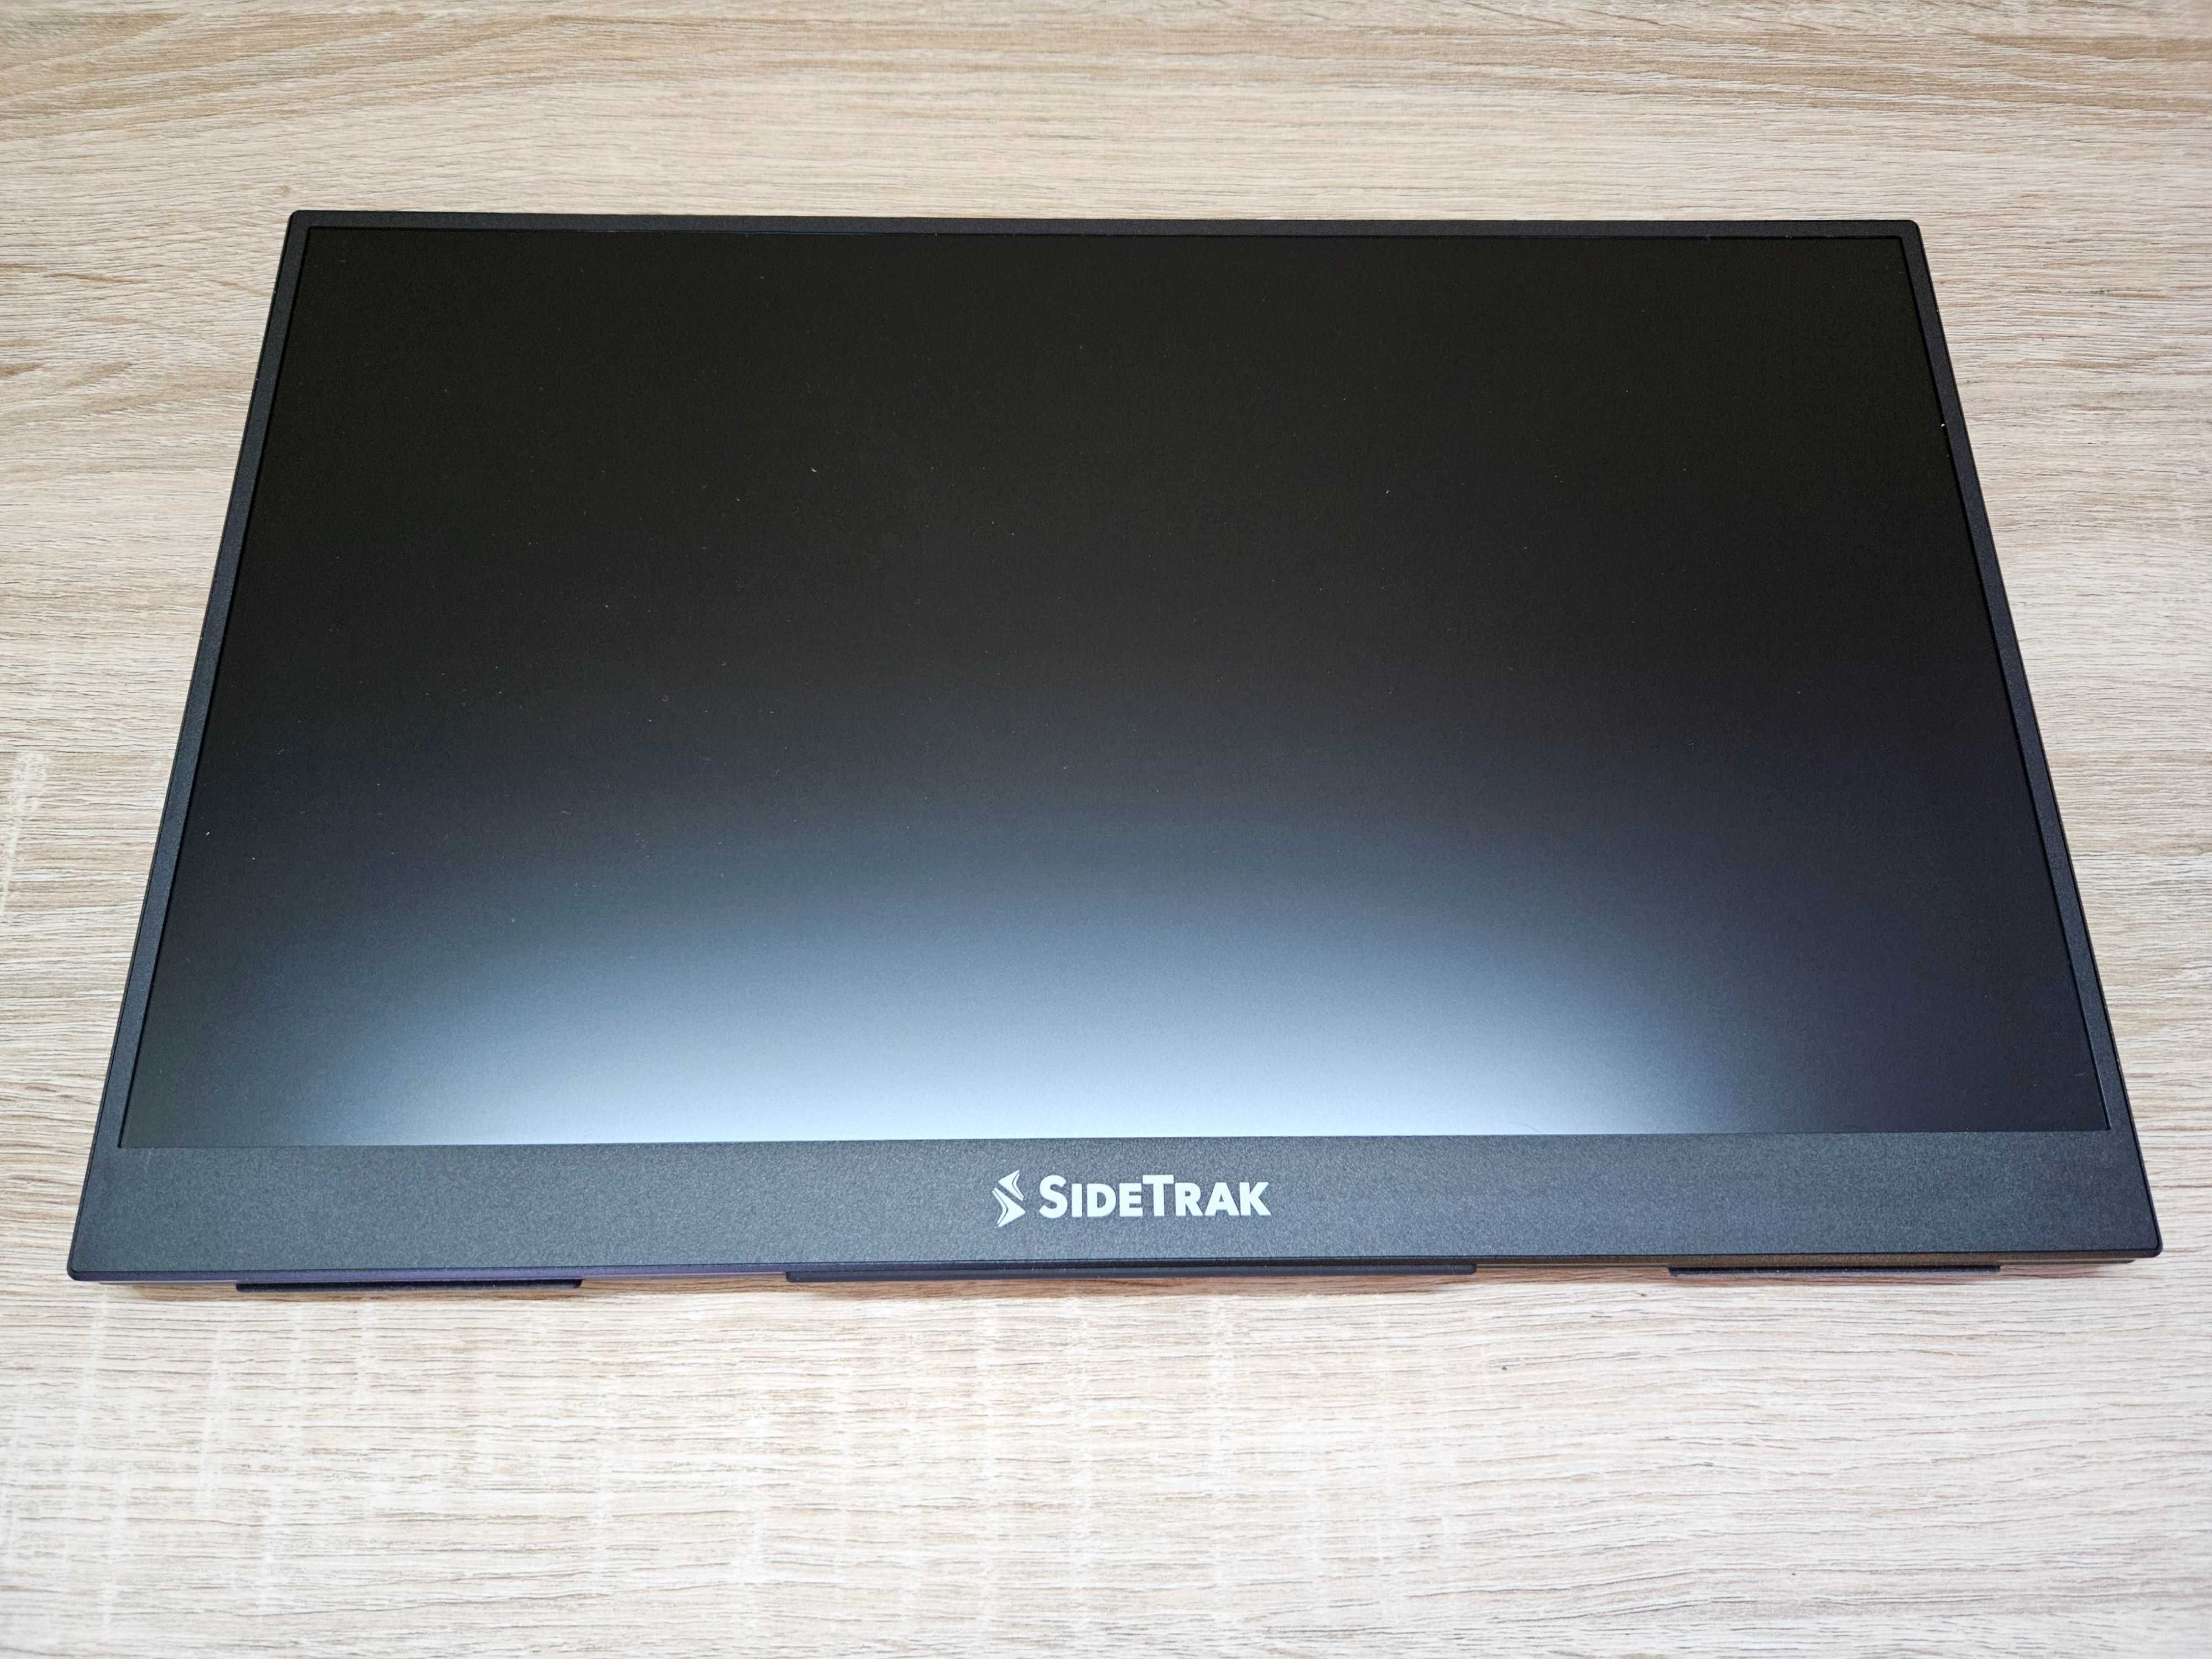 Портативный монитор SideTrak Solo Triple 15.6" FullHD|IPS|HDMI|USB C